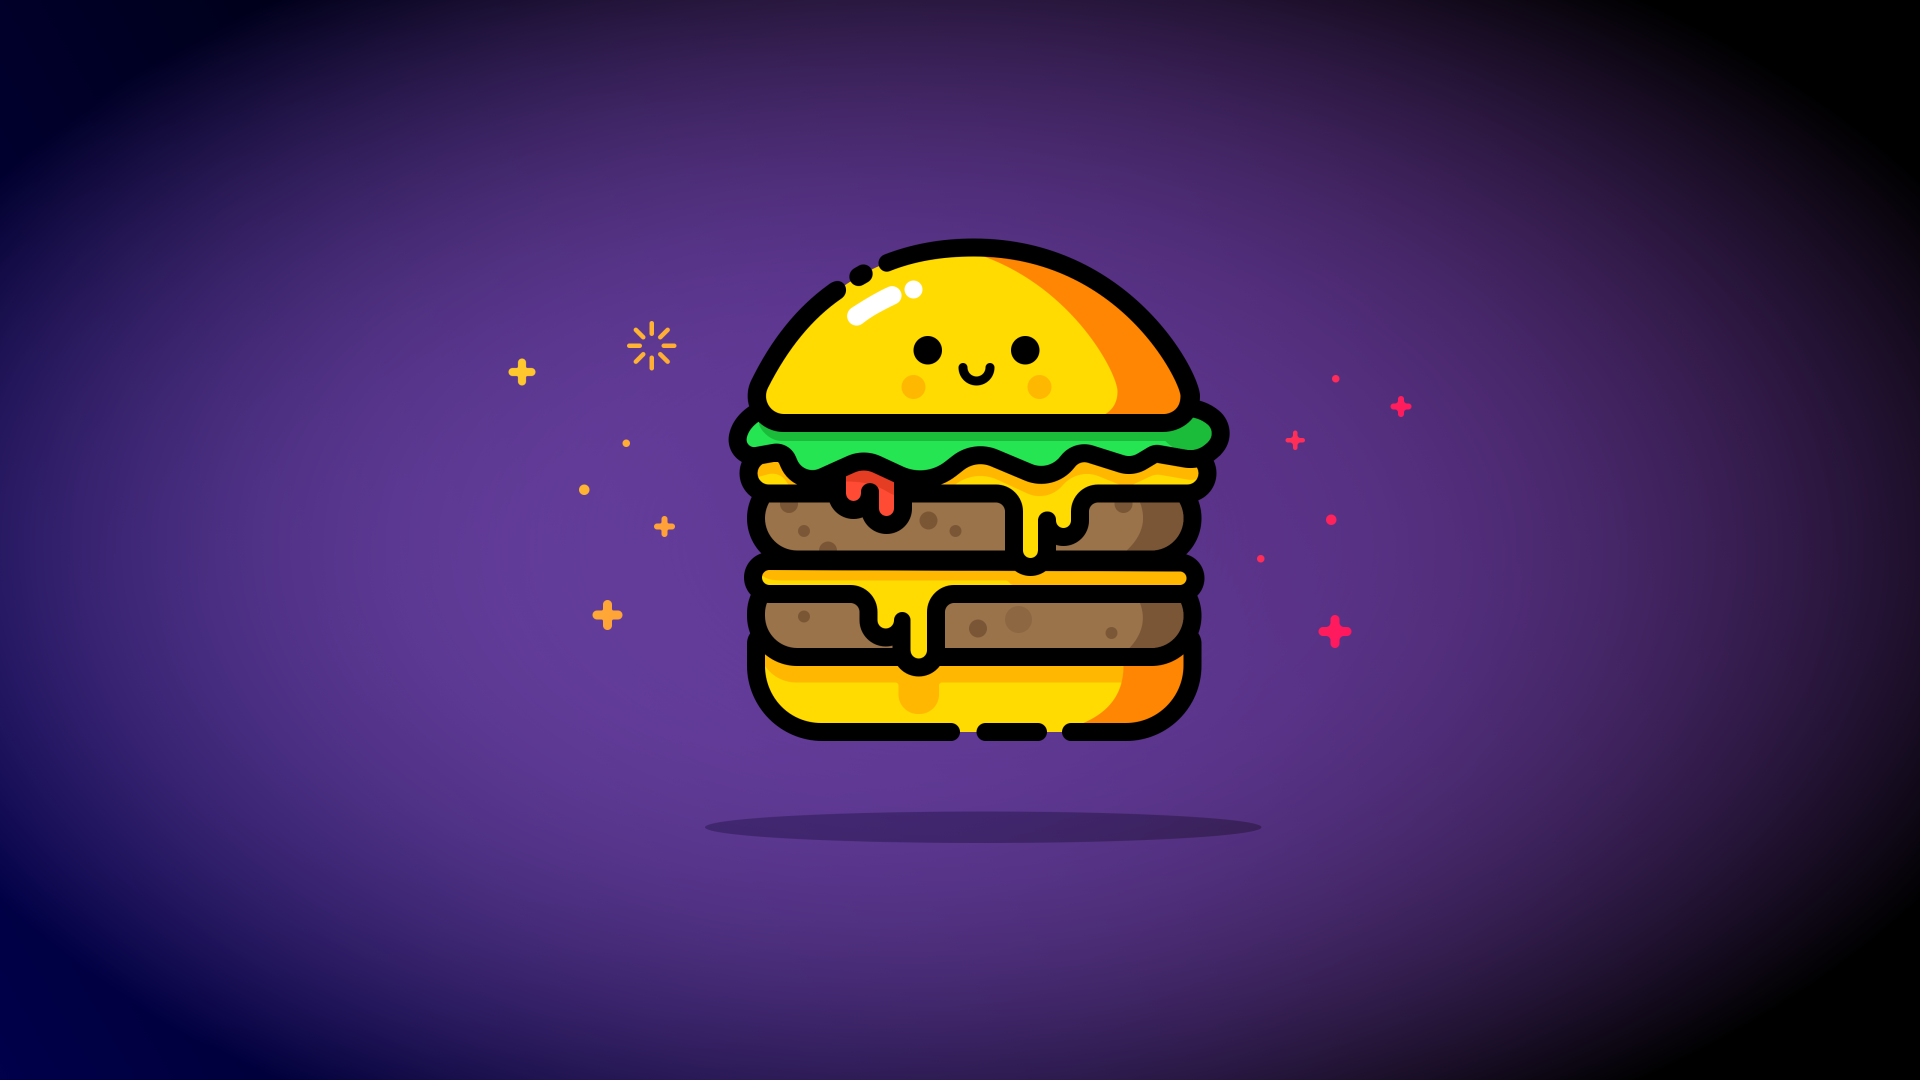 Painted cheerful hamburger on a purple background